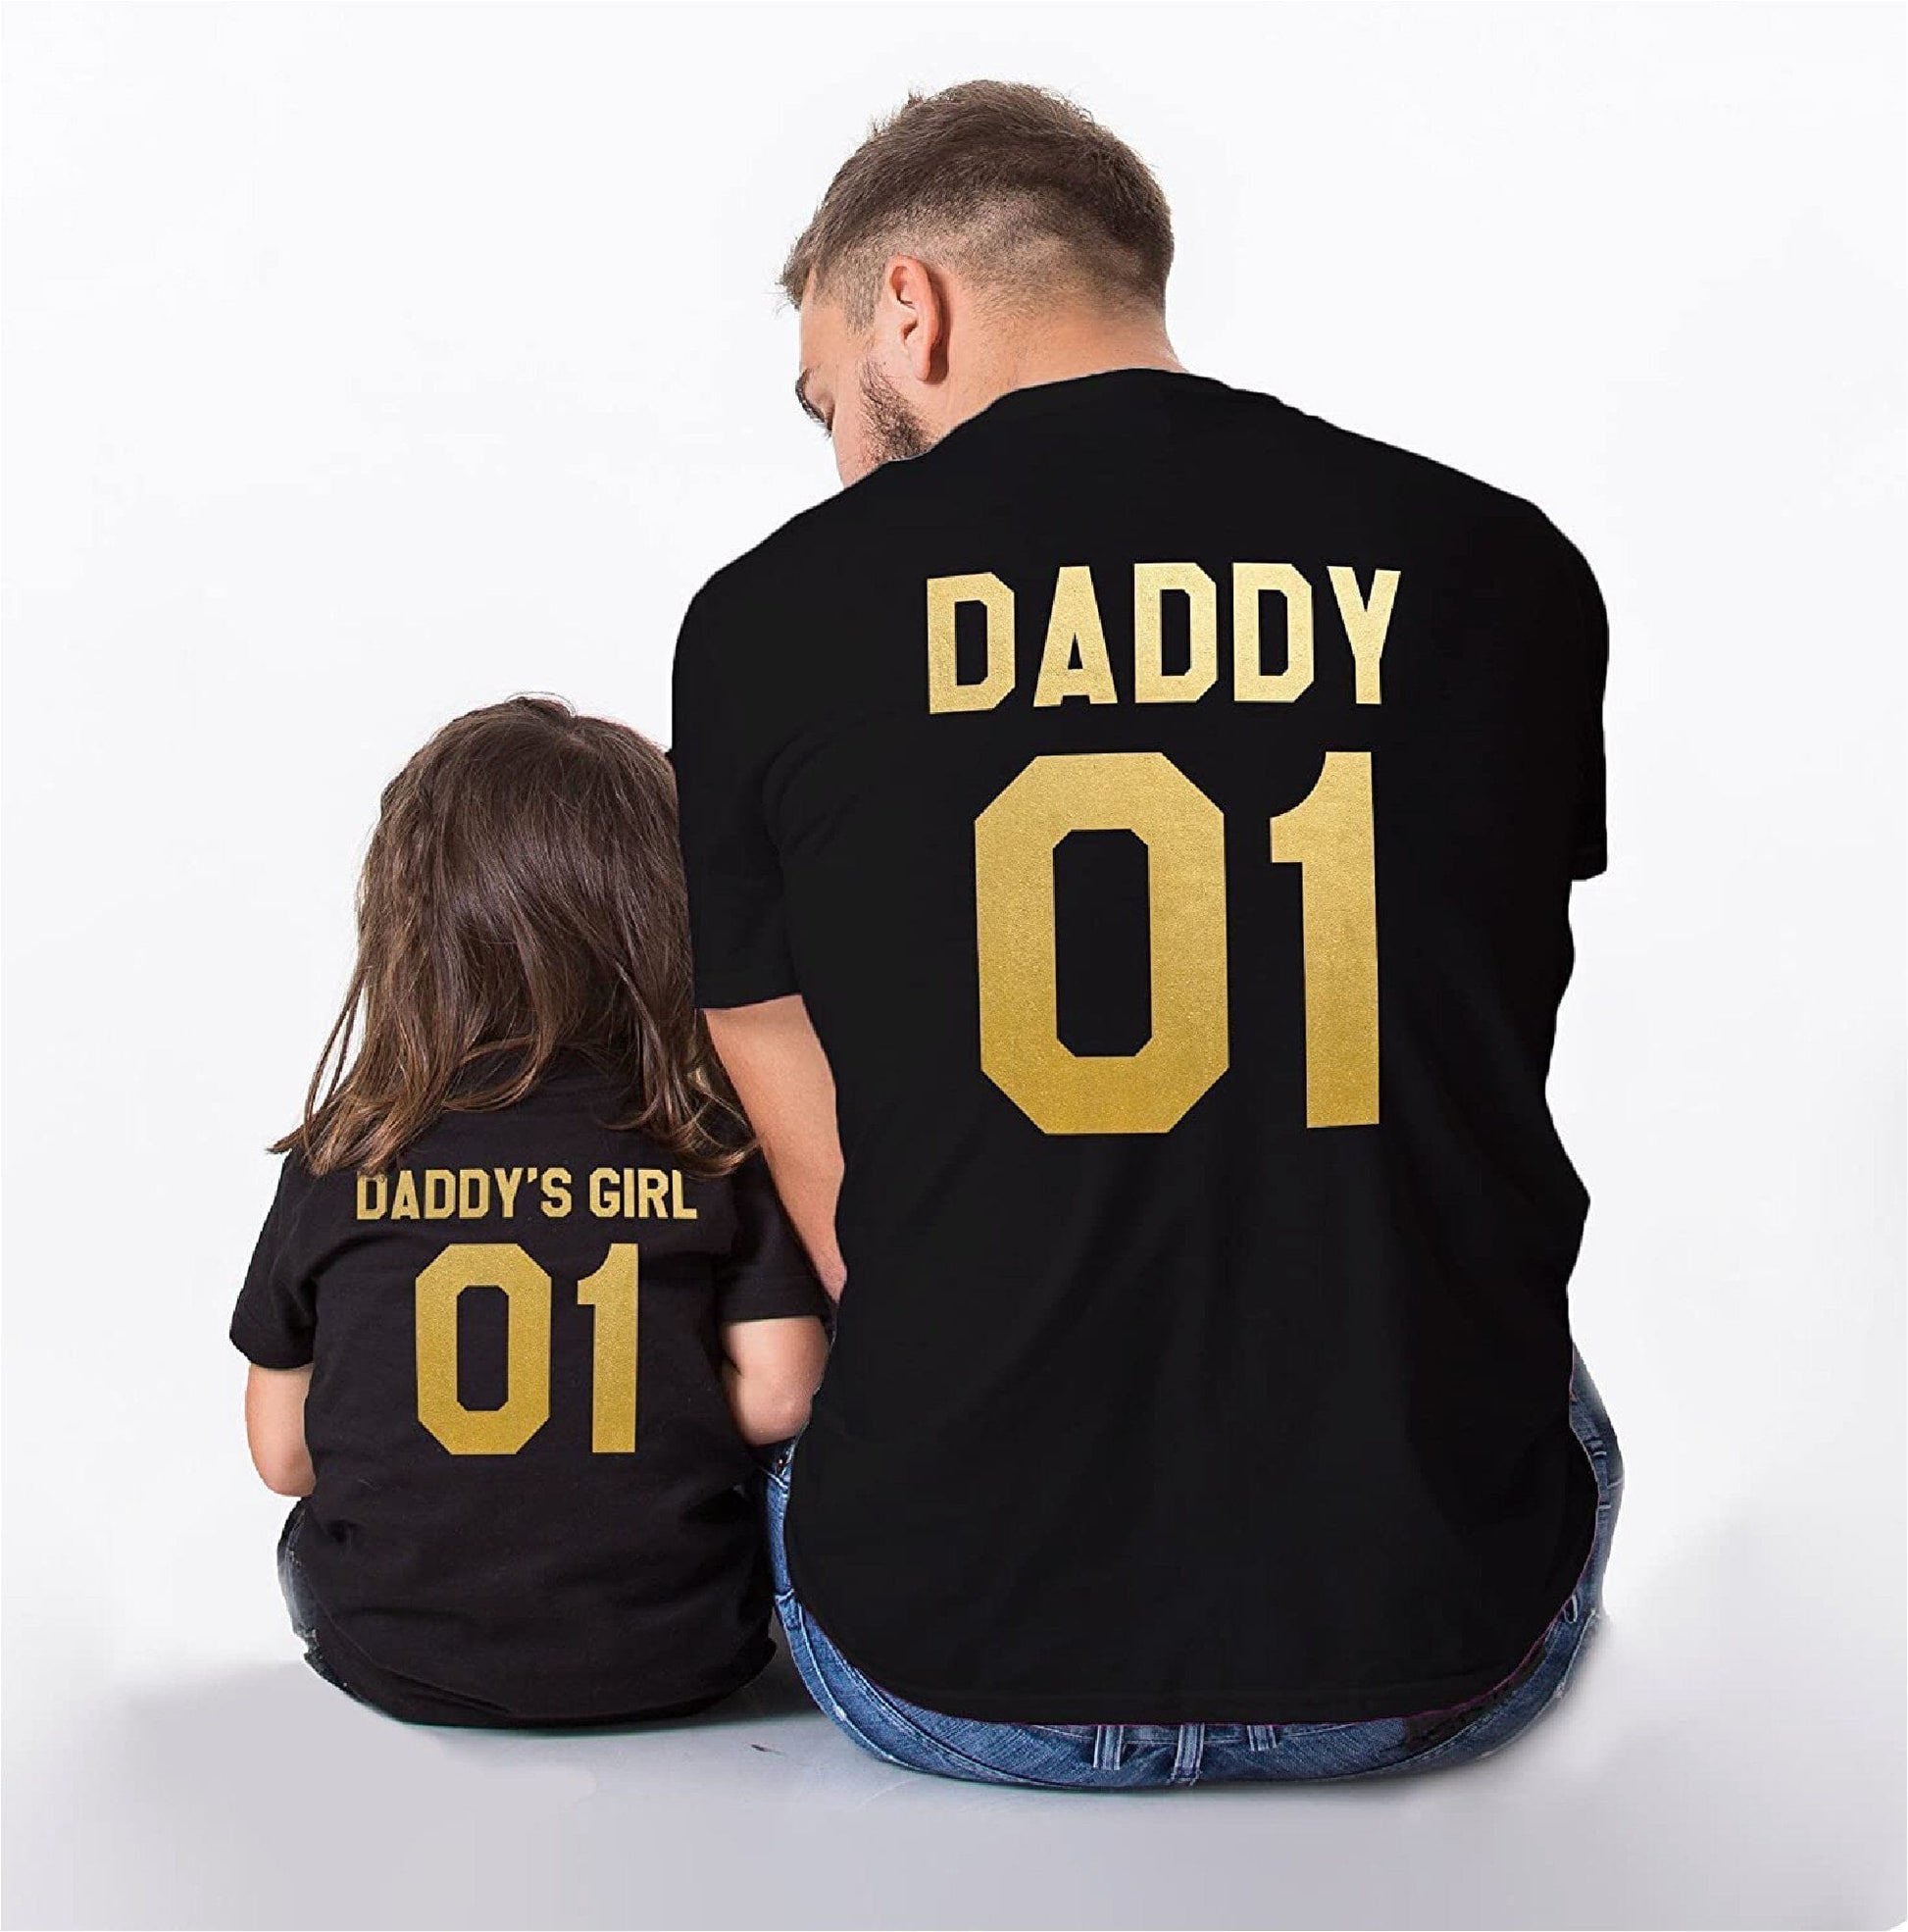 Daddy & Daddy's Girl Gold Text Tshirts